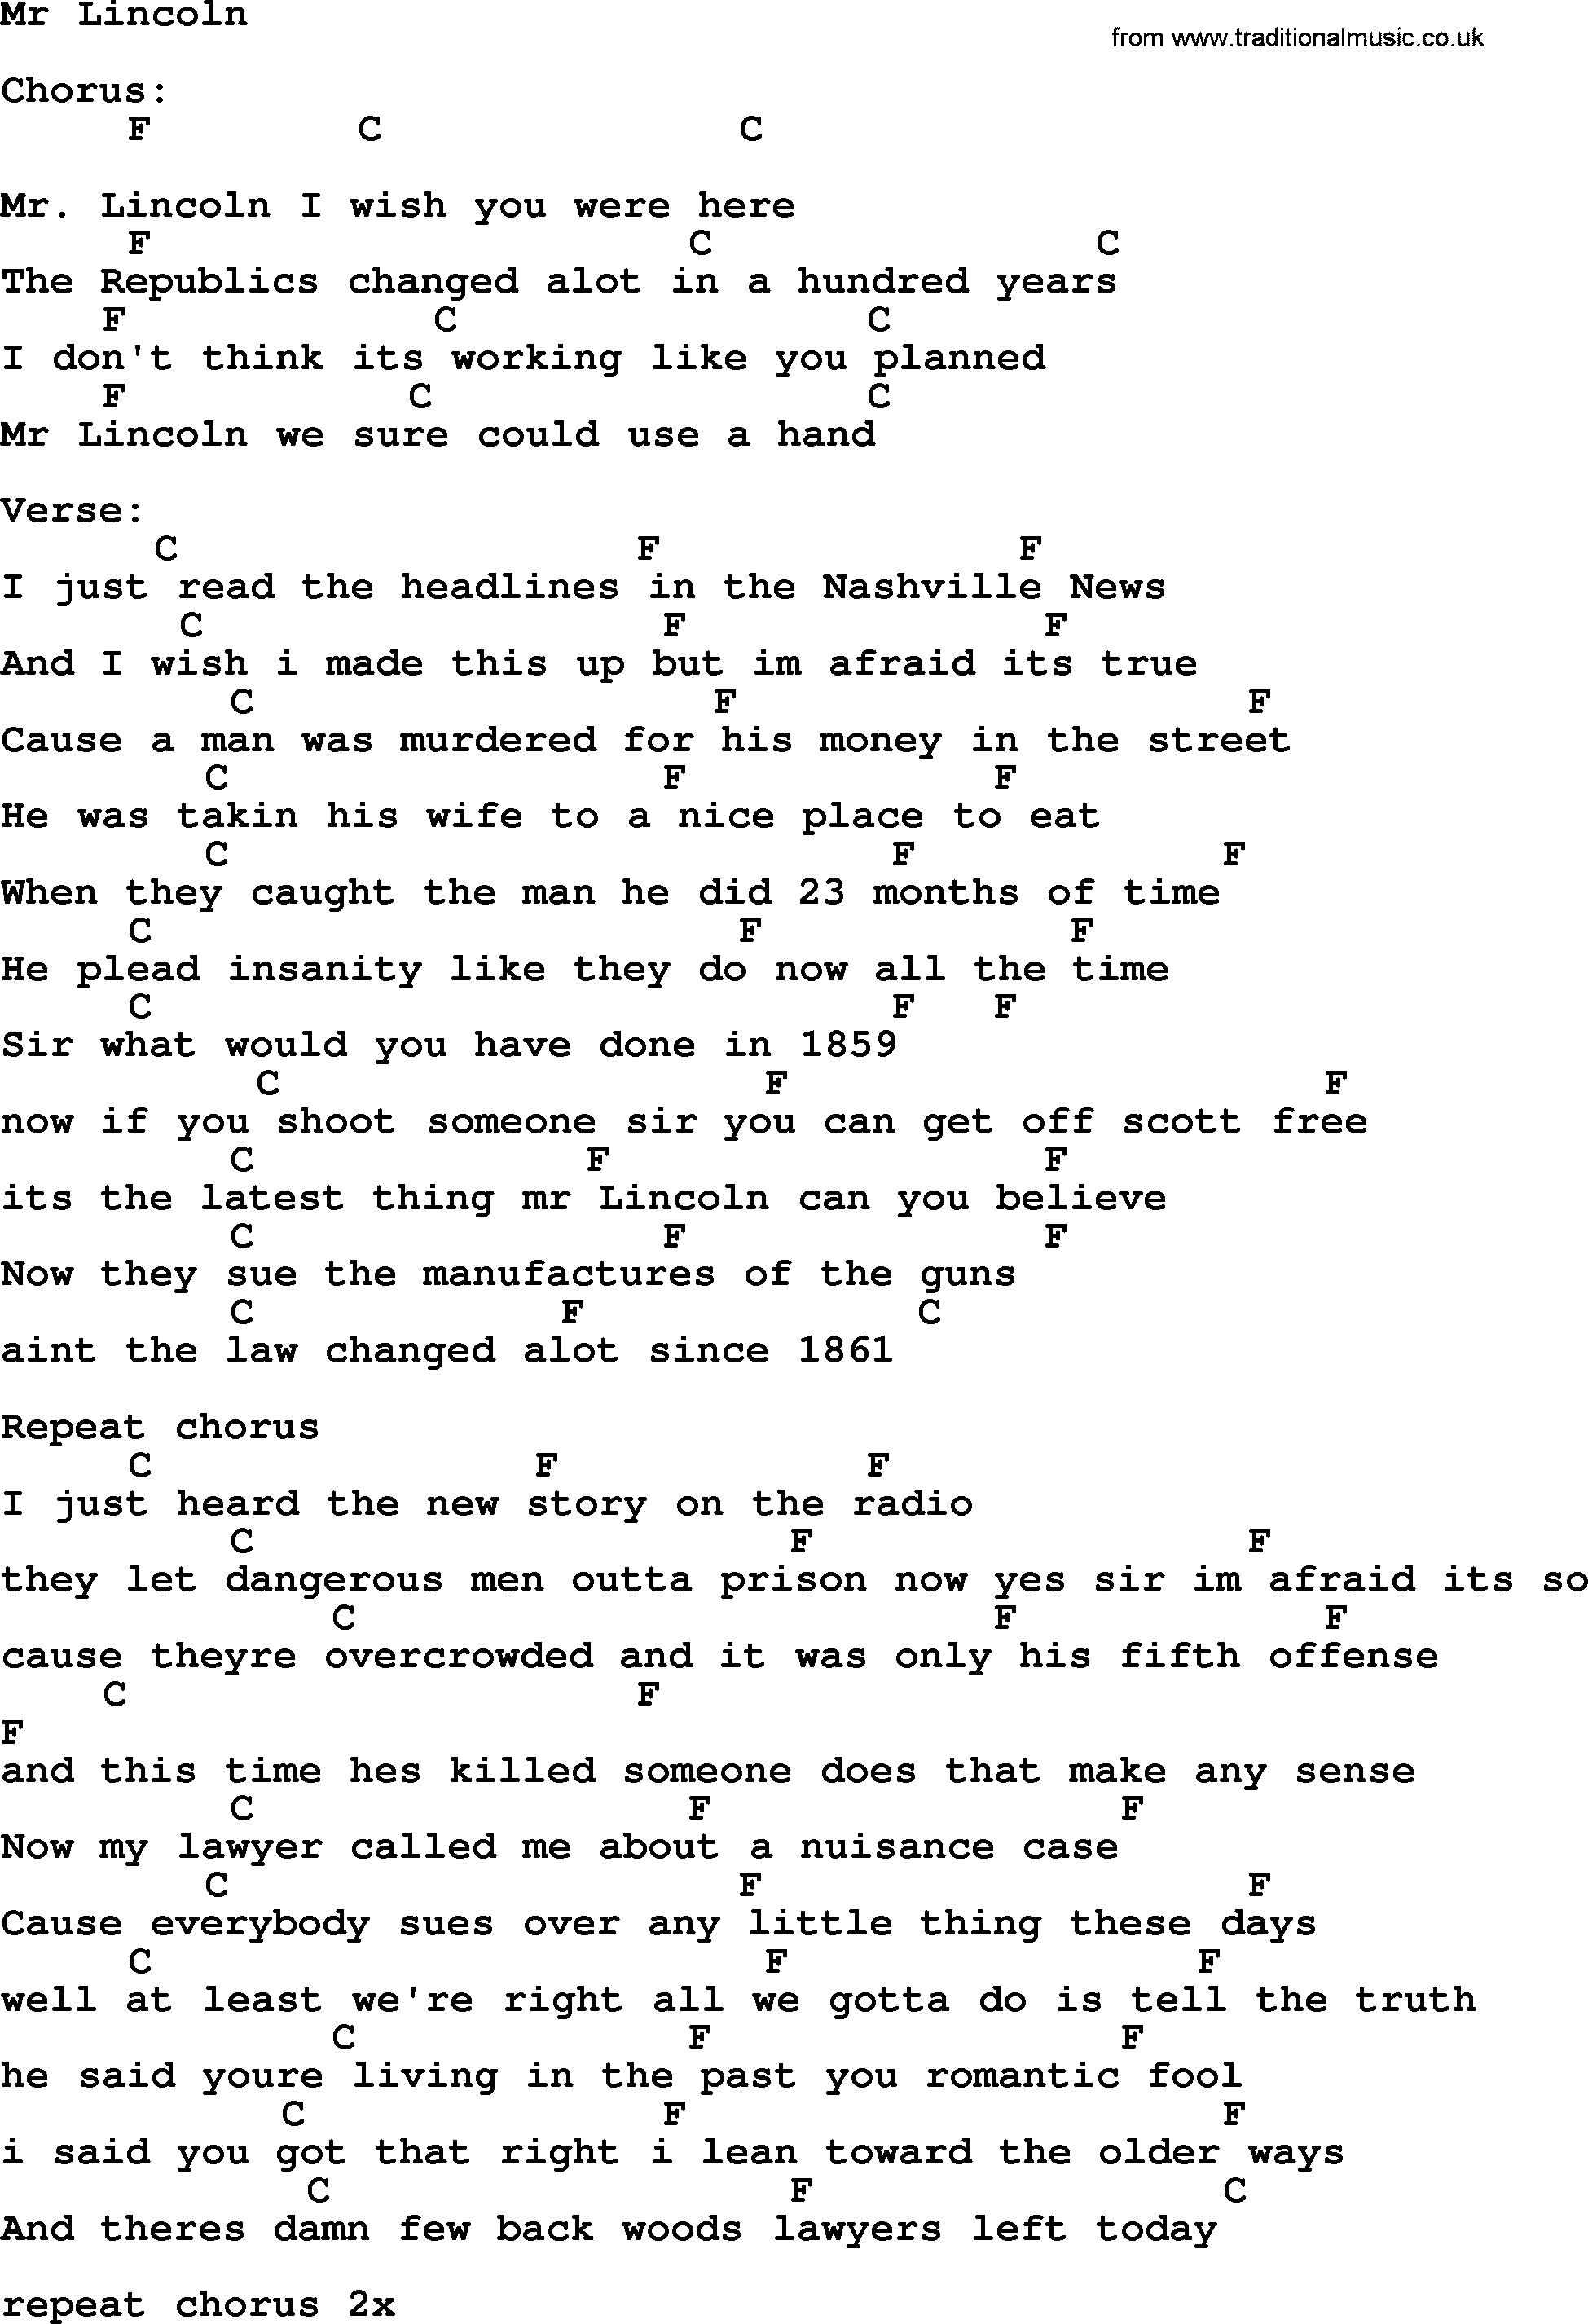 Hank Williams song Mr Lincoln, lyrics and chords